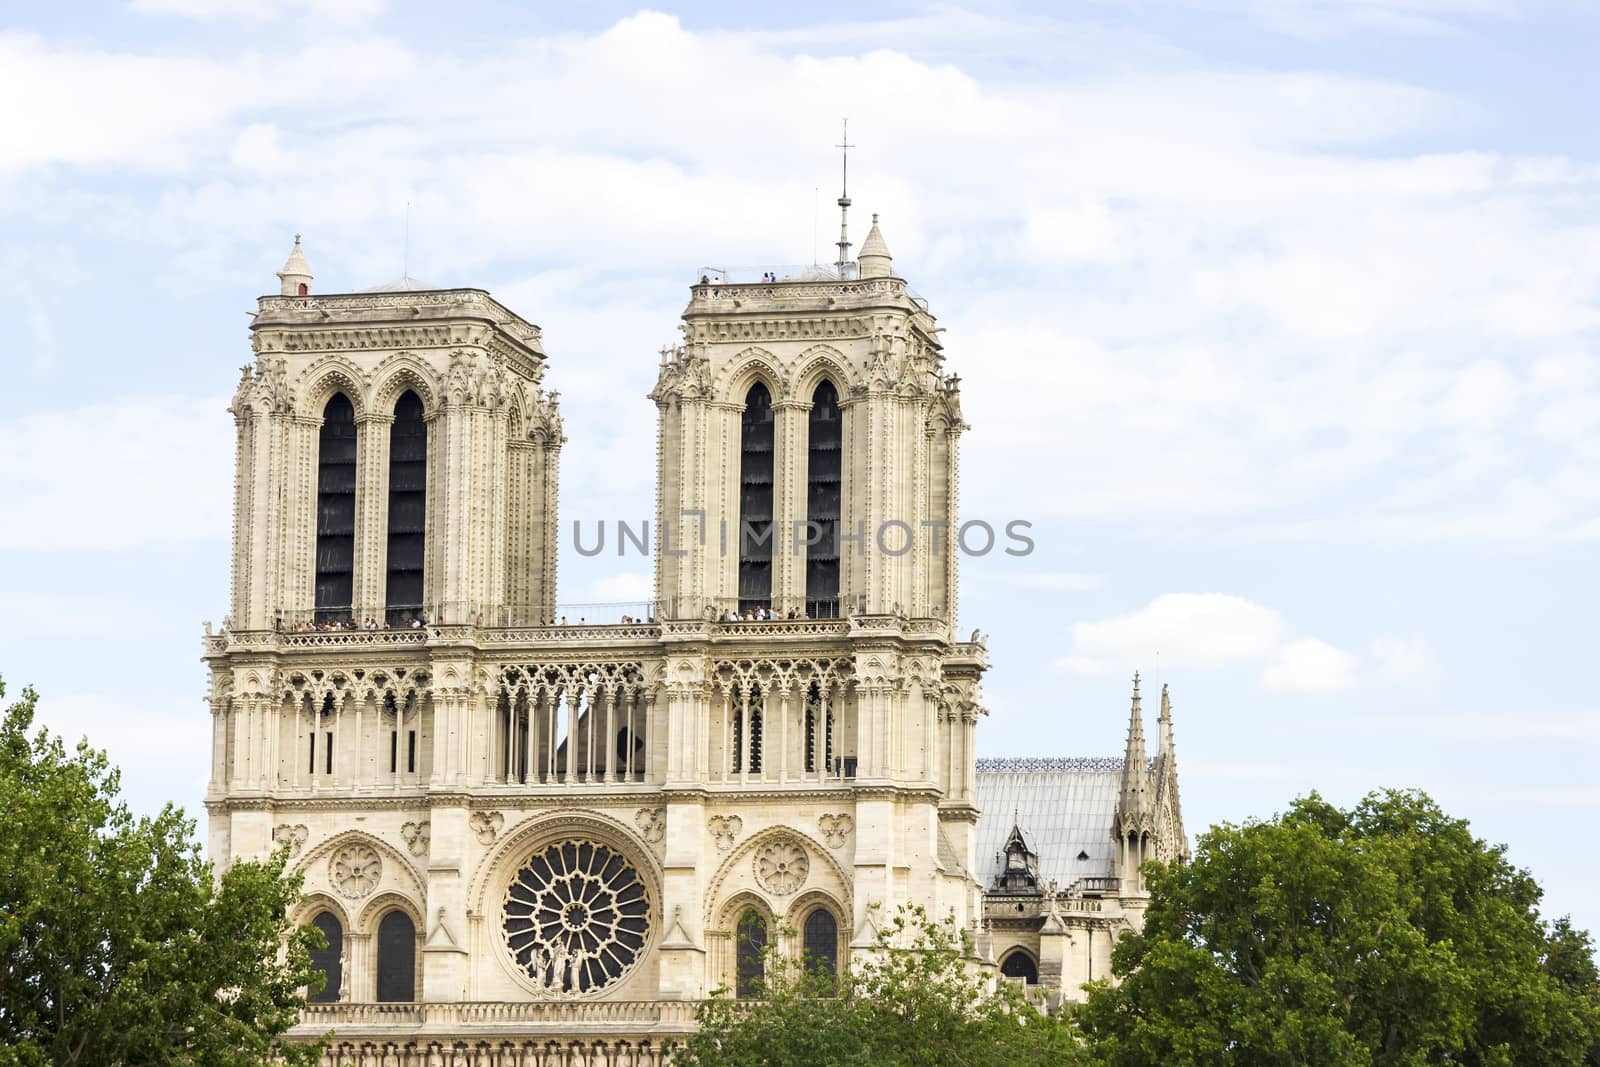 Notre Dame de Paris cathedral by Tetyana